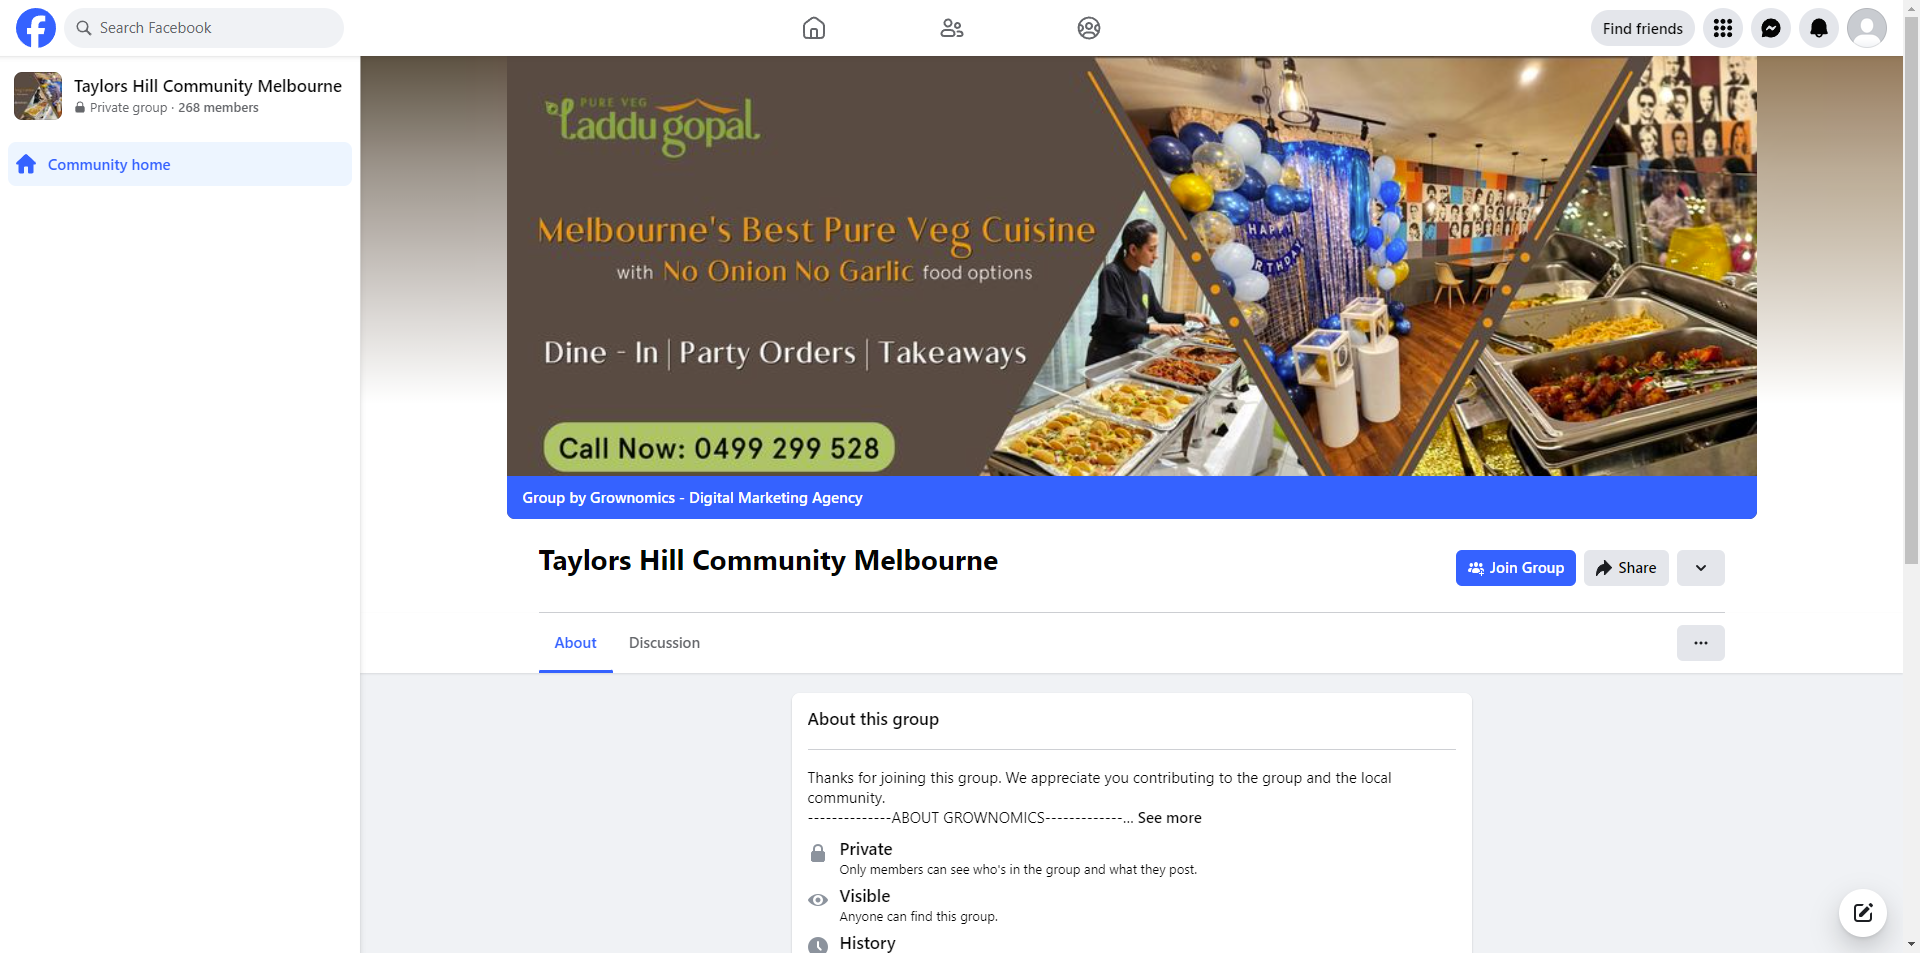 Taylors Hill Community Melbourne